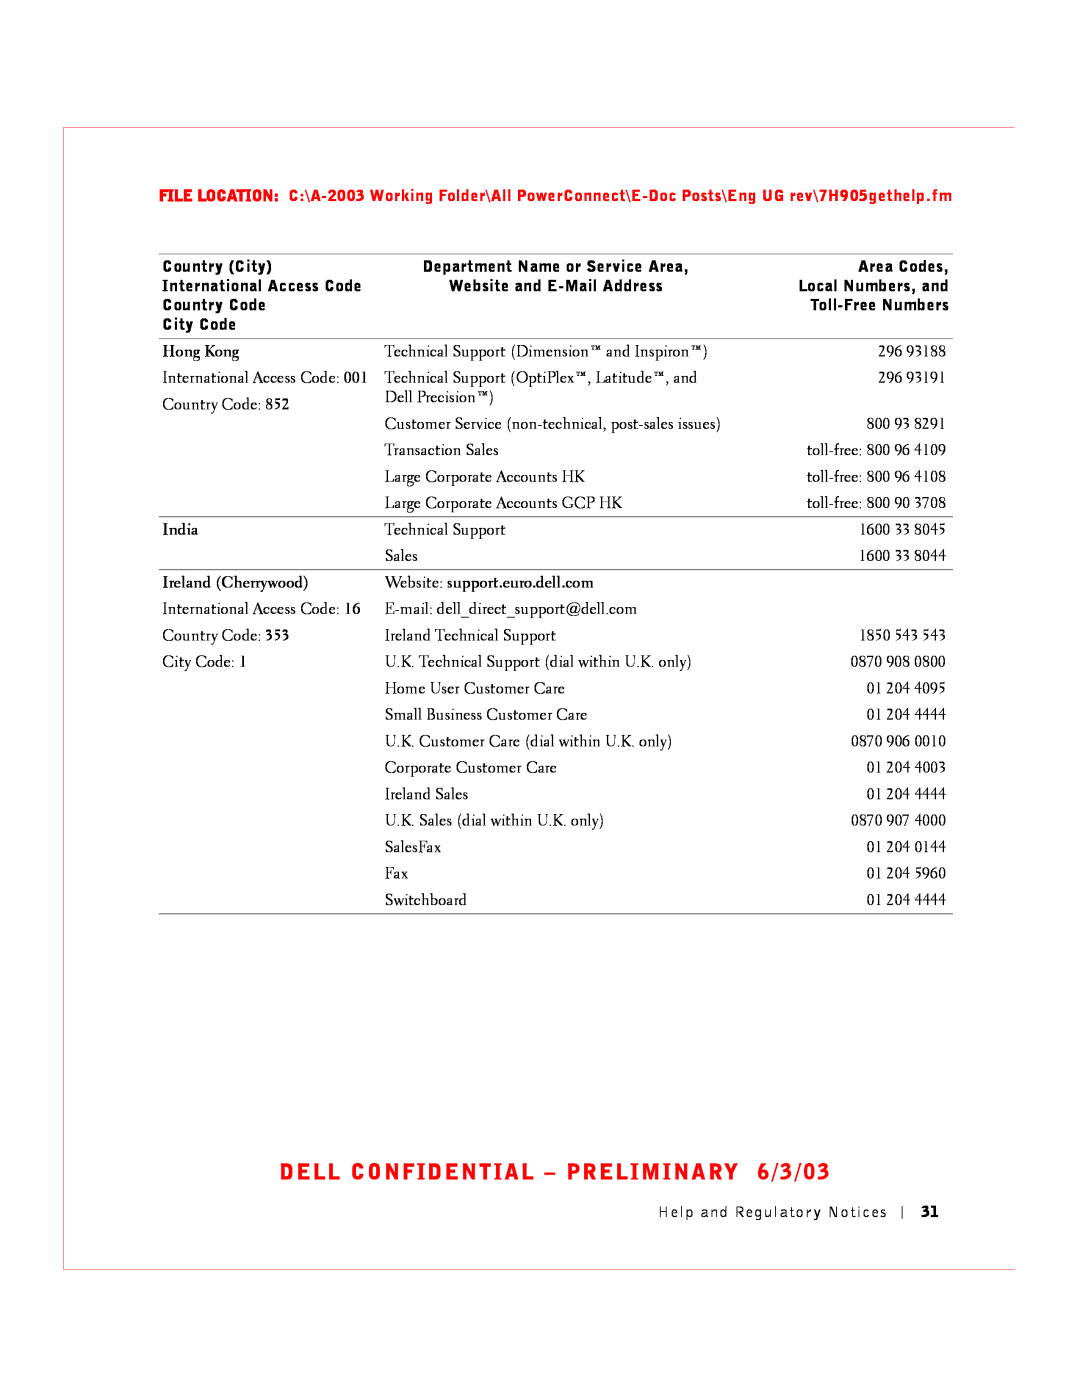 Dell 2016, 2024 manual DELL CONFIDENTIAL - PRELIMINARY 6/3/03, Hong Kong, India, Ireland Cherrywood 